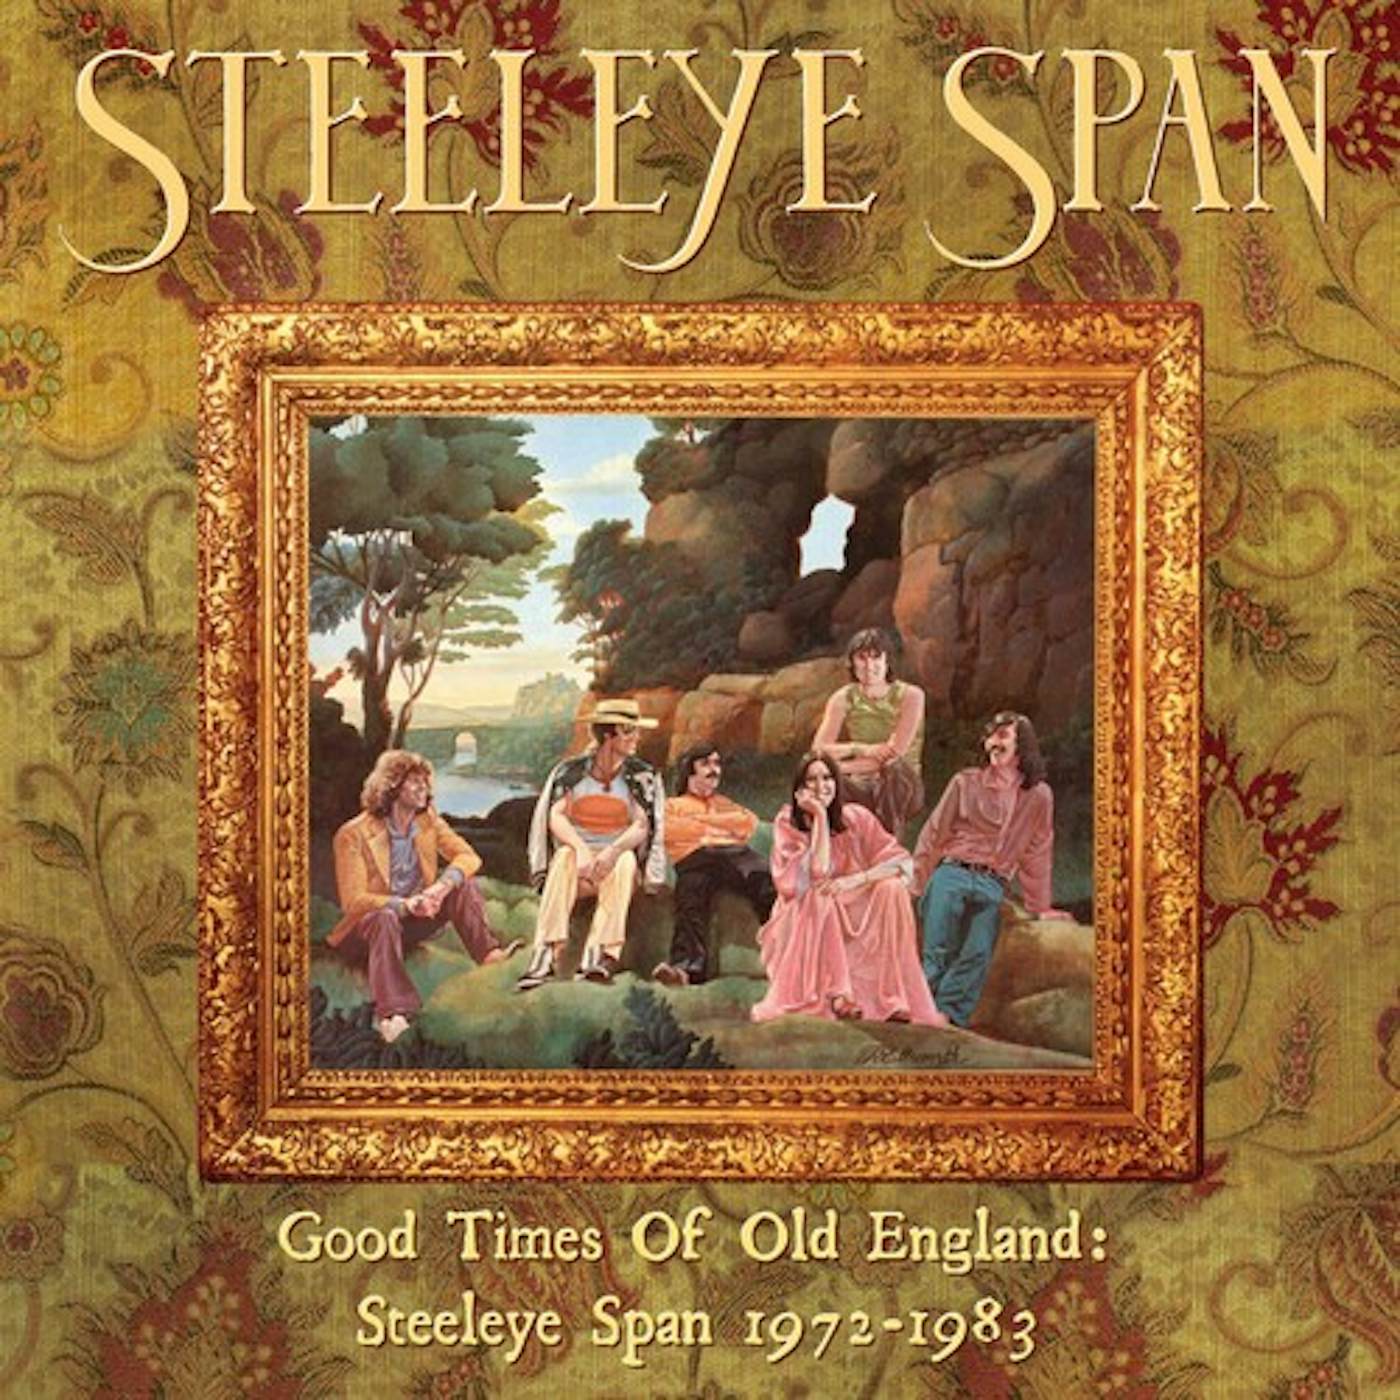 GOOD TIMES OF OLD ENGLAND: STEELEYE SPAN 1972-1983 CD